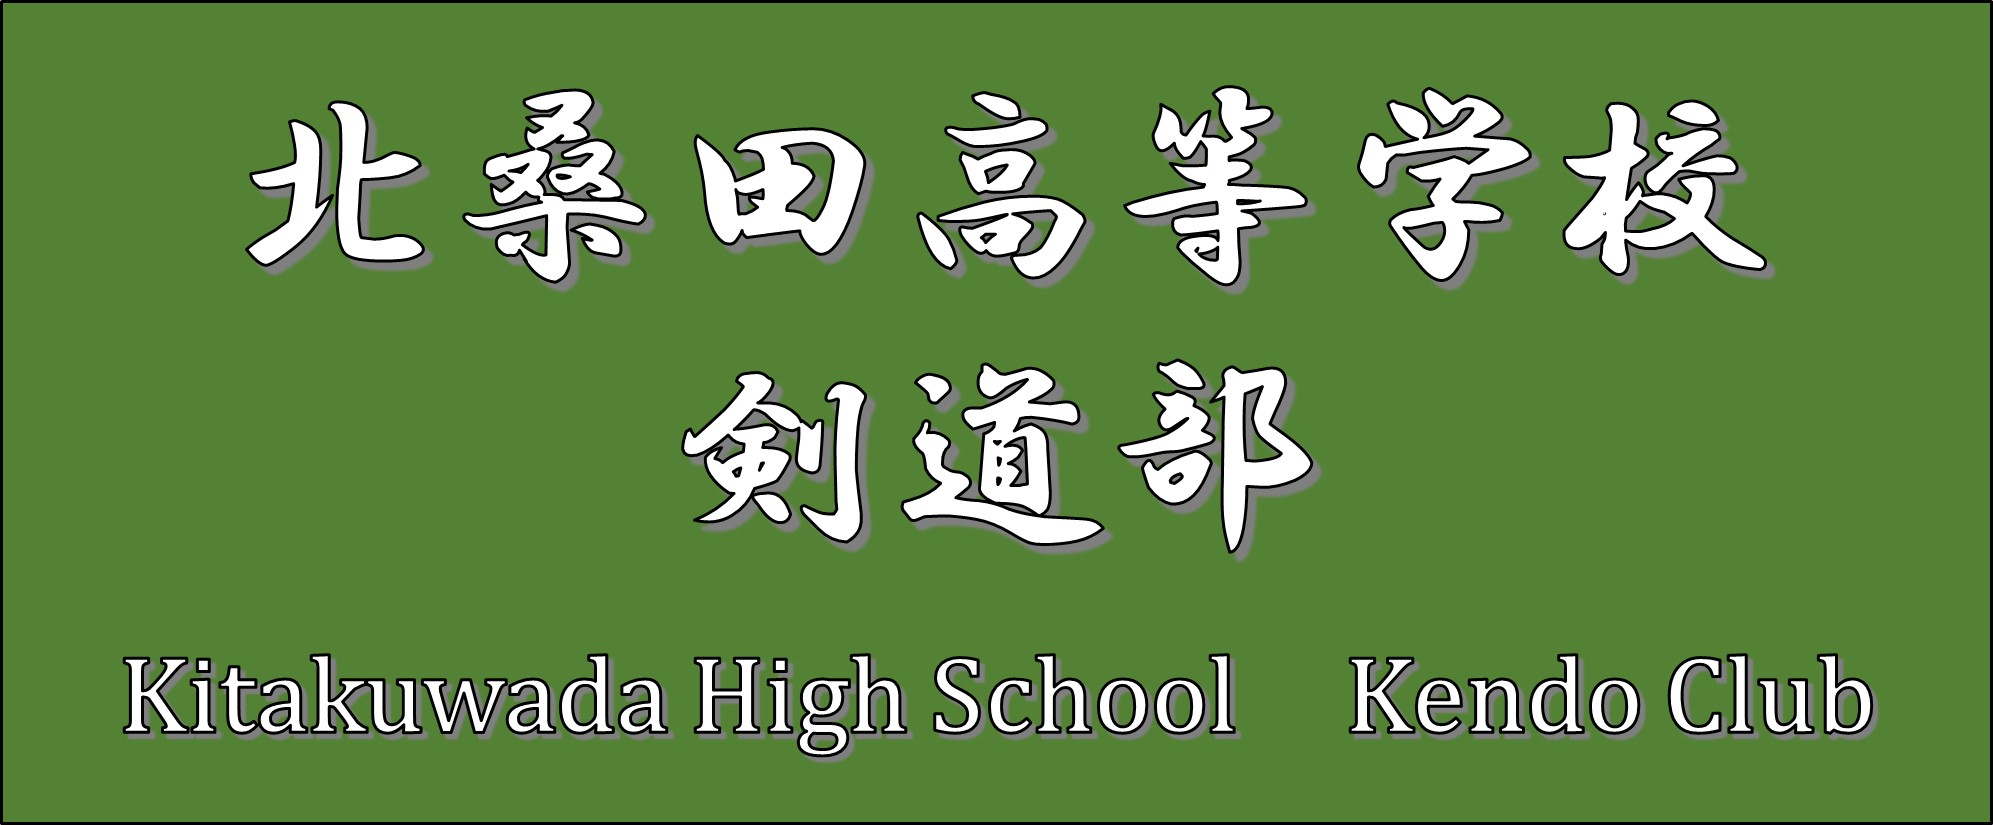 Kendo club logo